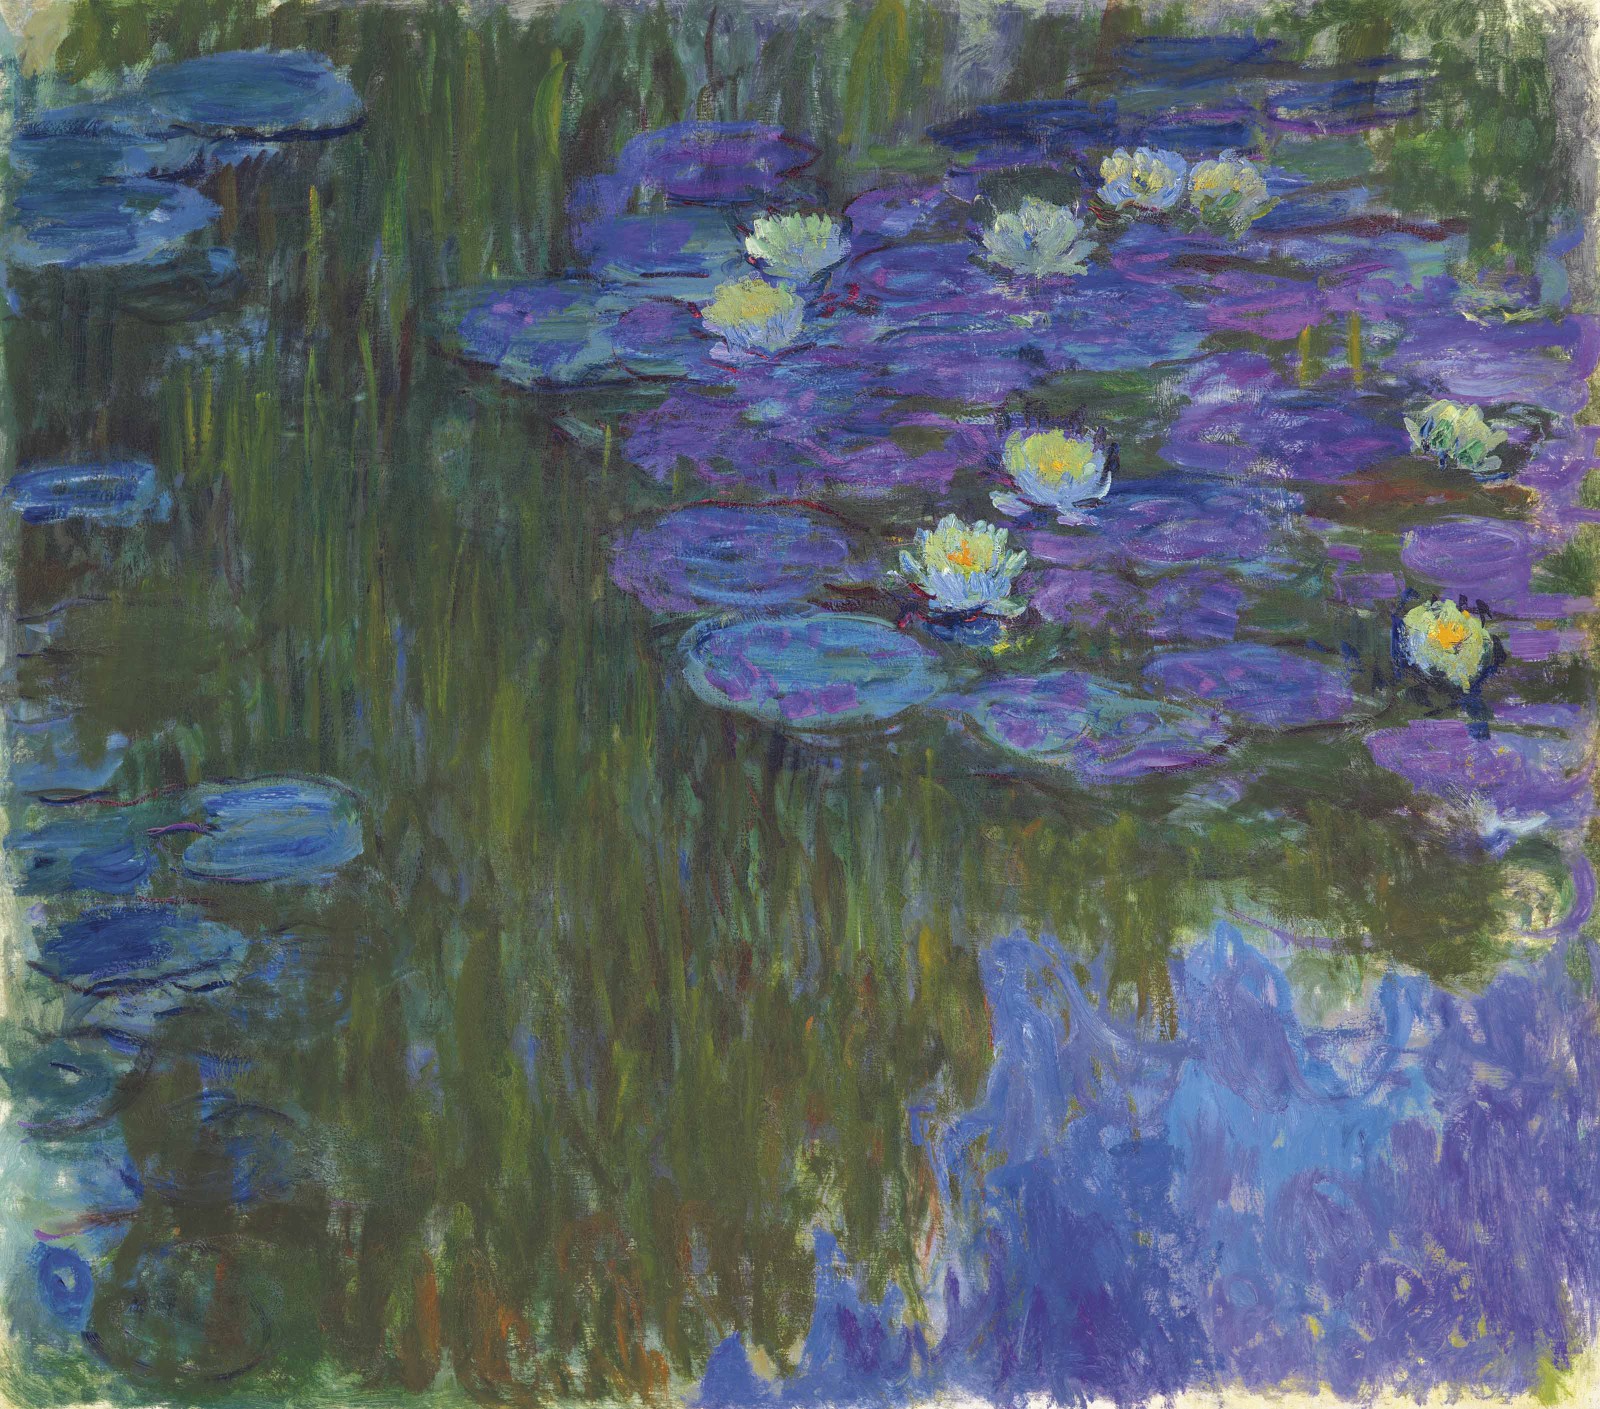 Quadro "Nymphéas en fleur", de Claude Monet, foi negociado por US$84.687.500Christie's